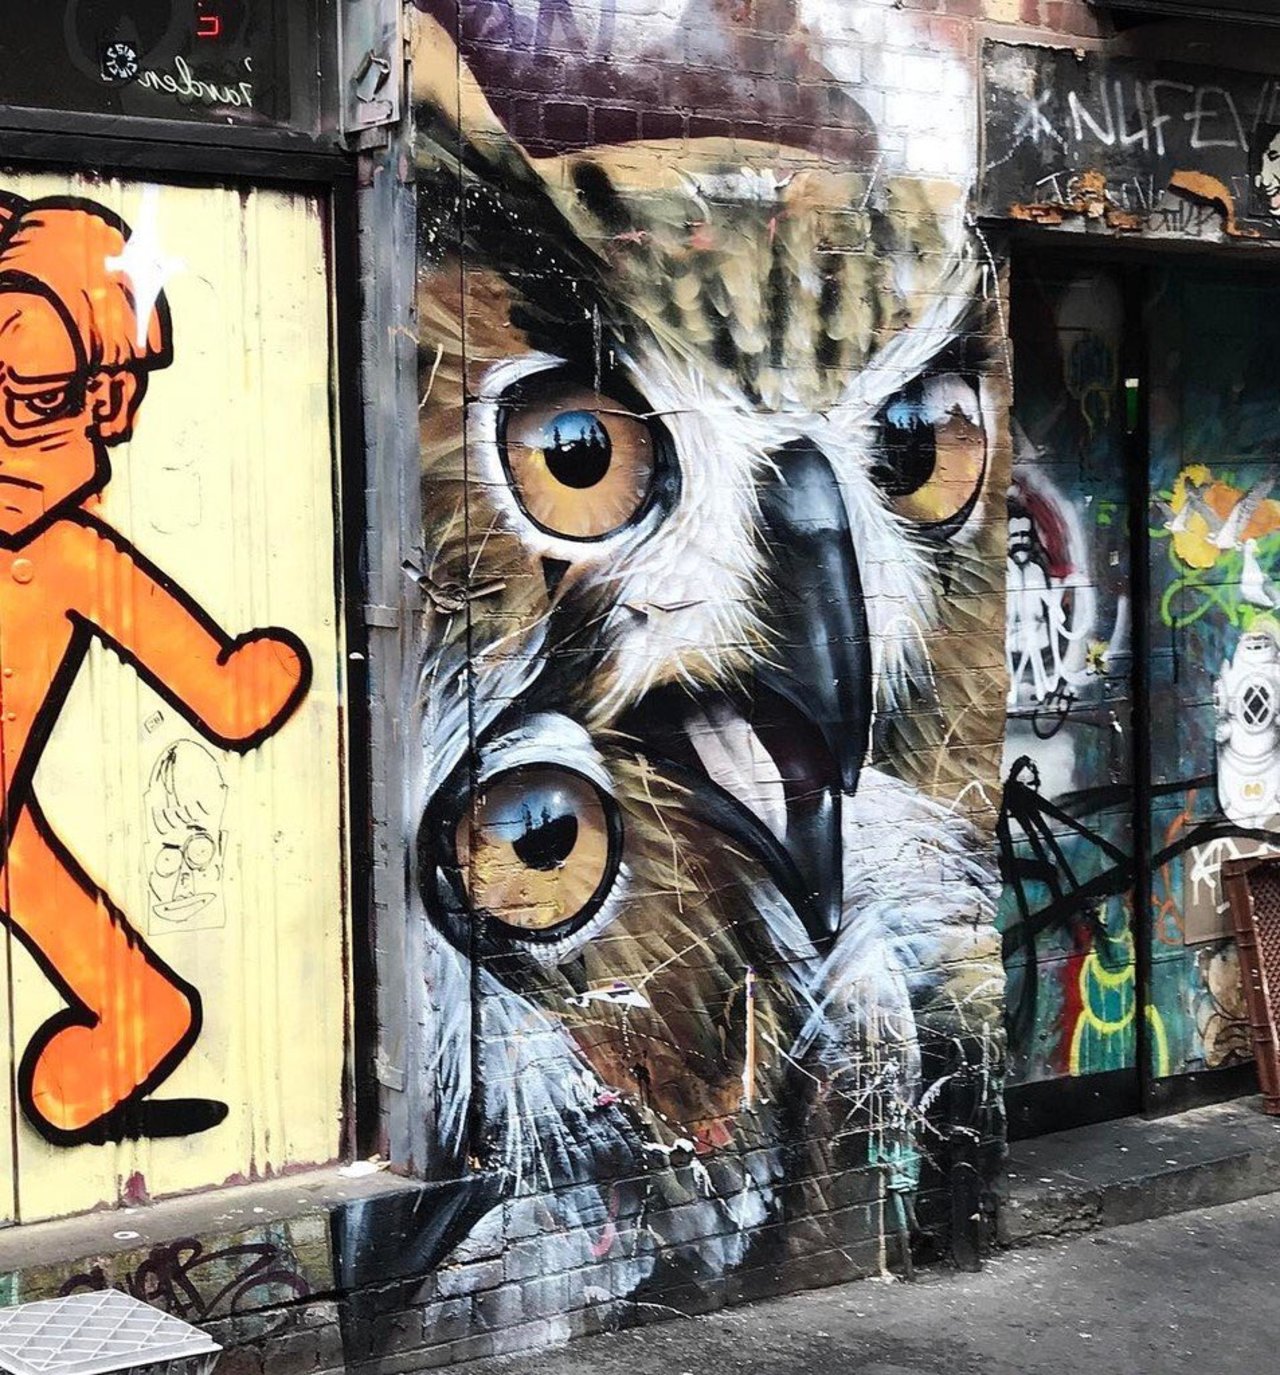 Flinders Street #Melbourne #Australia #Streetart #graffiti #art https://t.co/QrULaAJMrZ